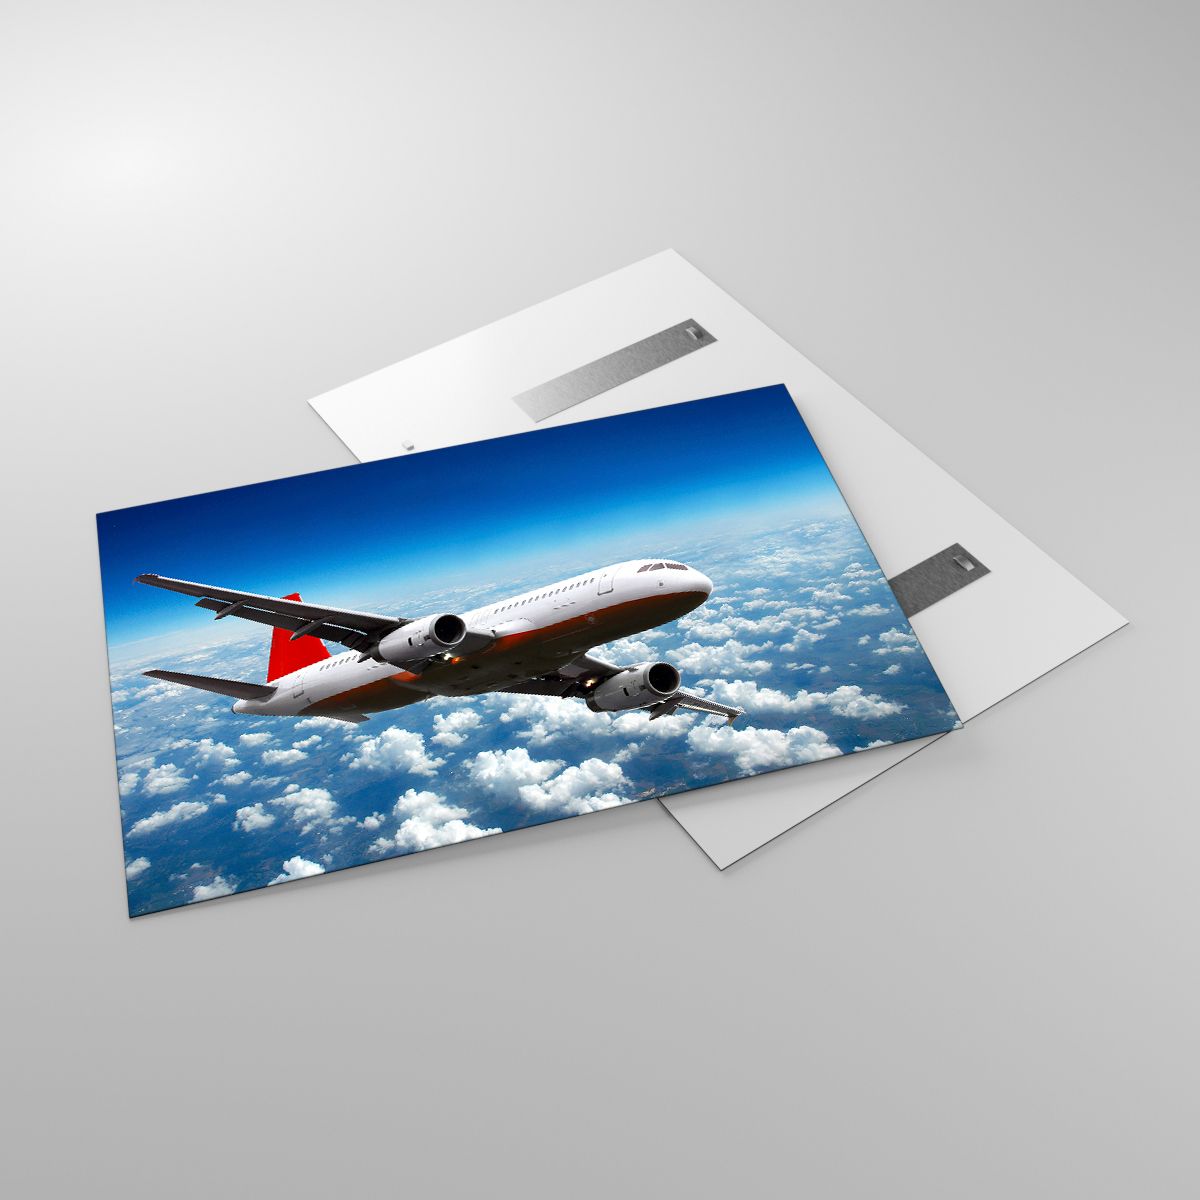 Glasbild Ebene, Glasbild Reisen, Glasbild Wolken, Glasbild Ebene, Glasbild Flugzeug